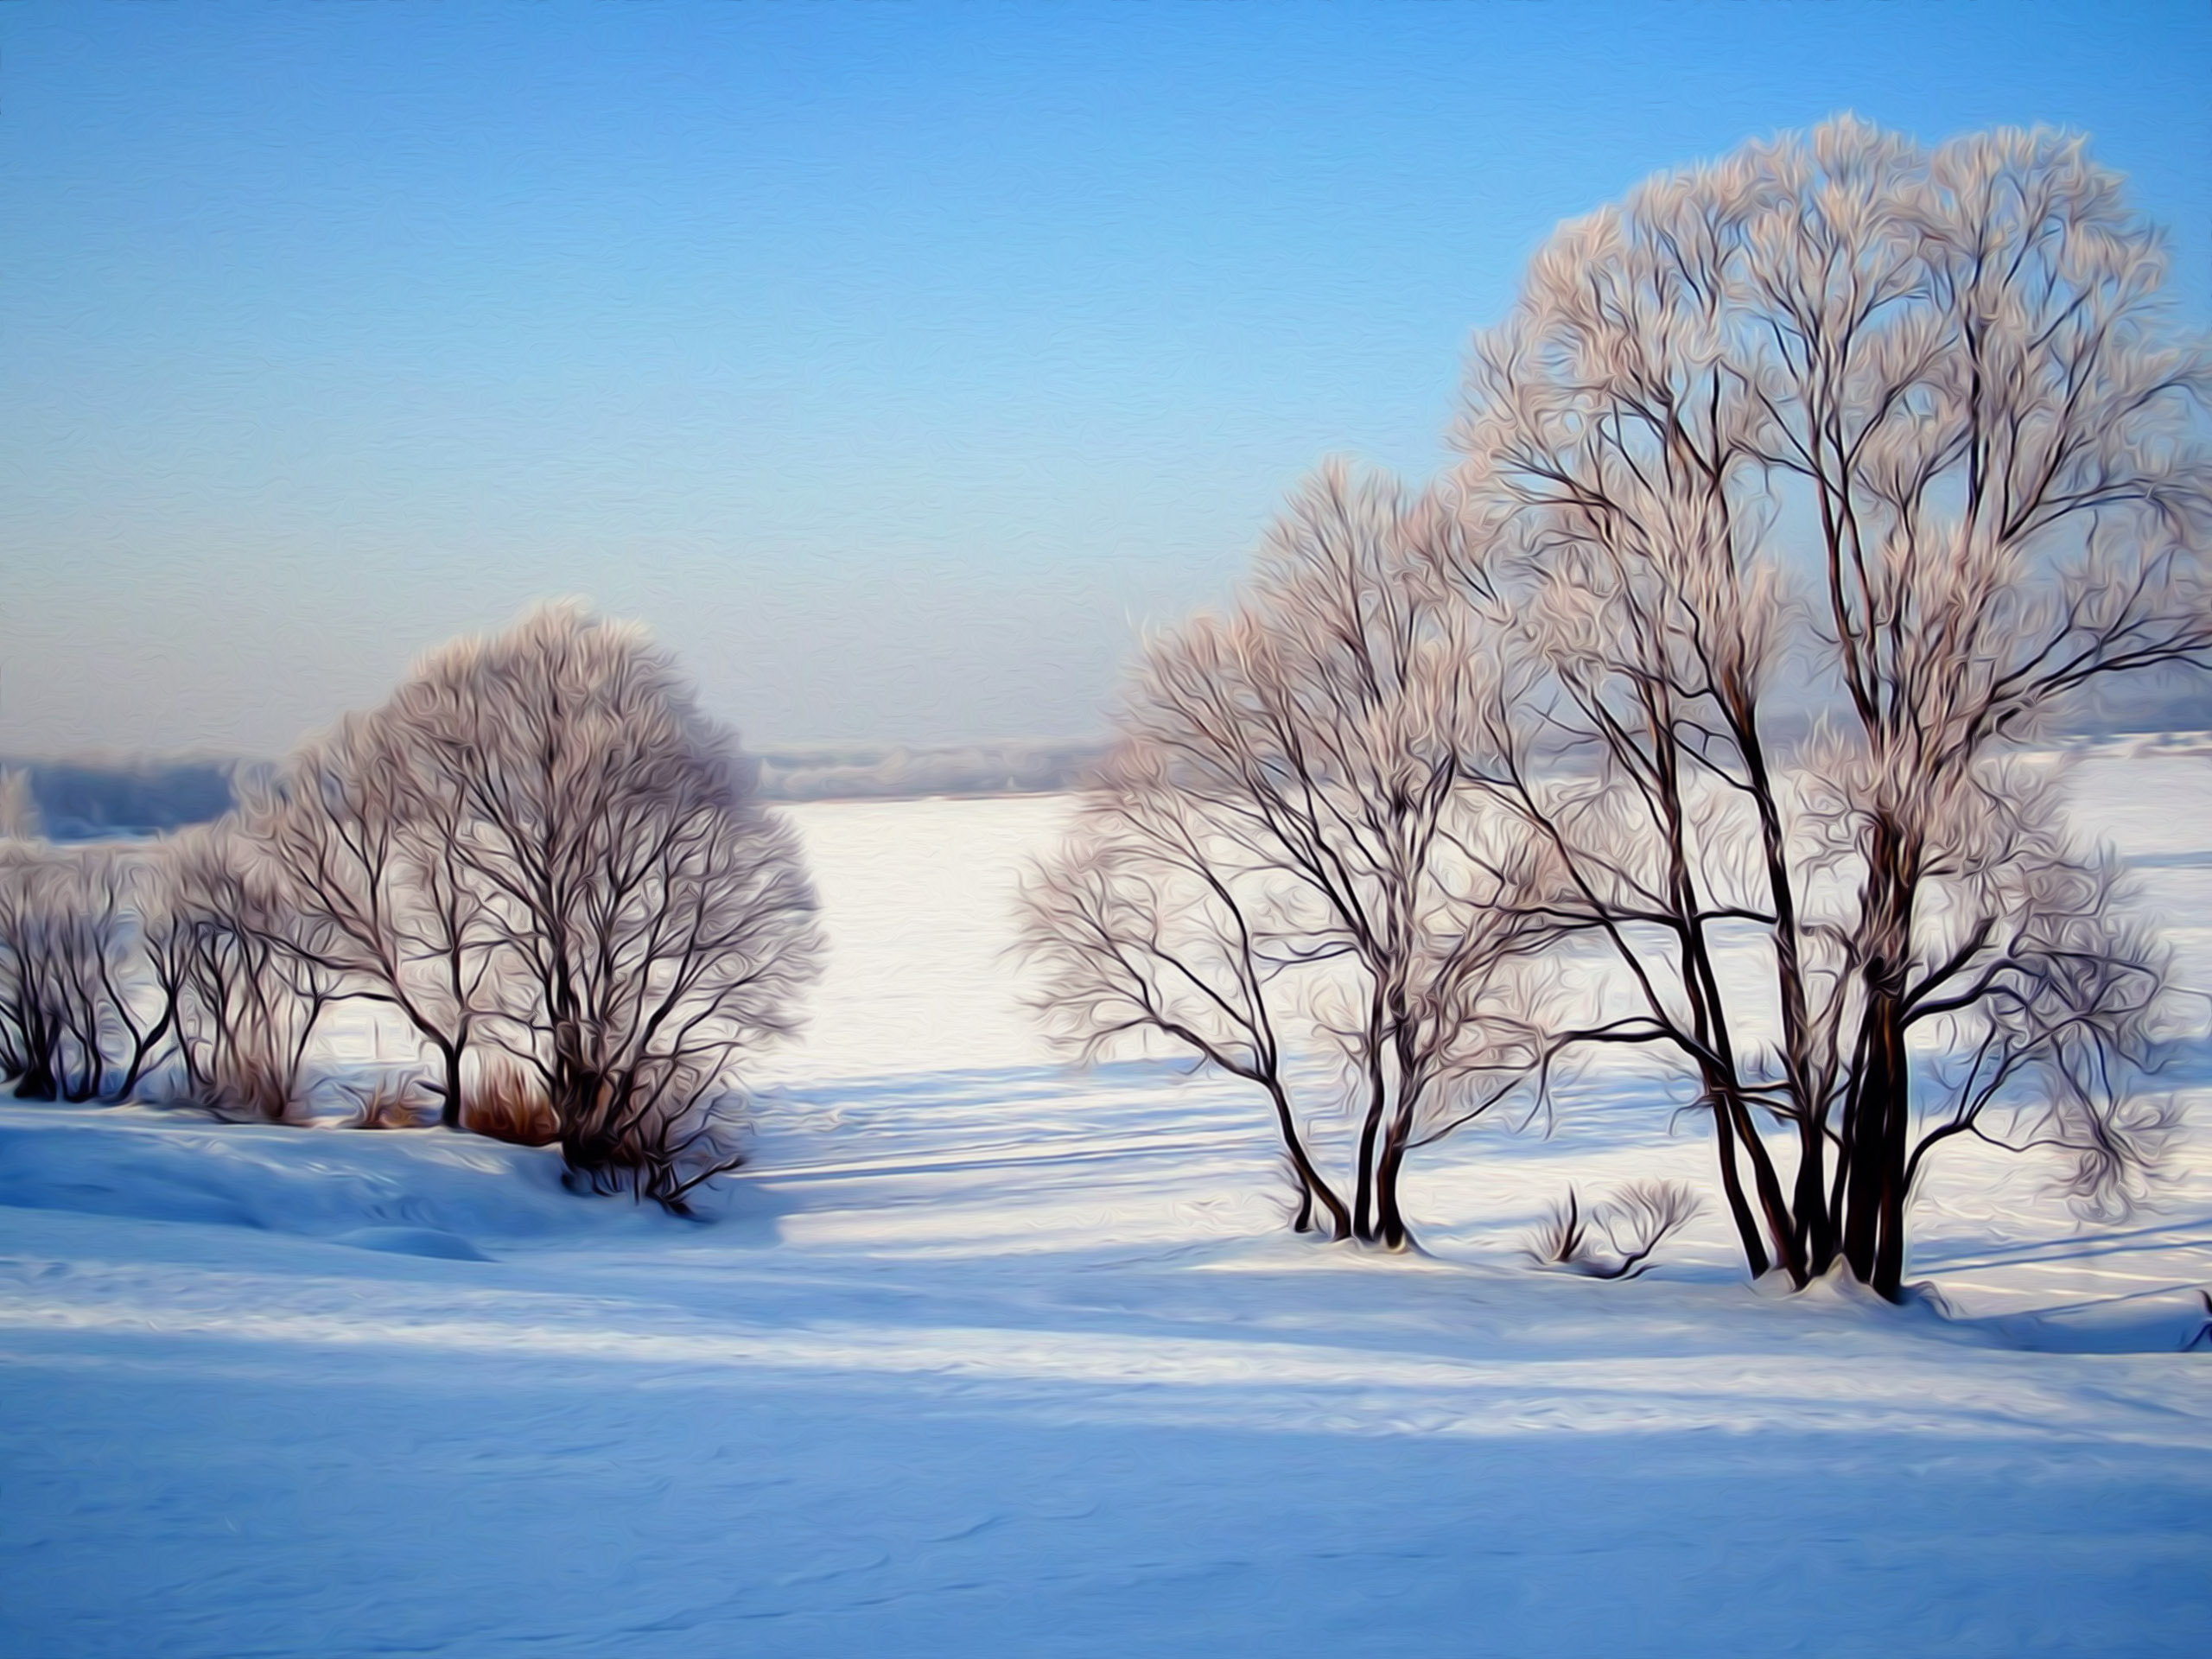 High Definition Winter Scenes Wallpaper - WallpaperSafari